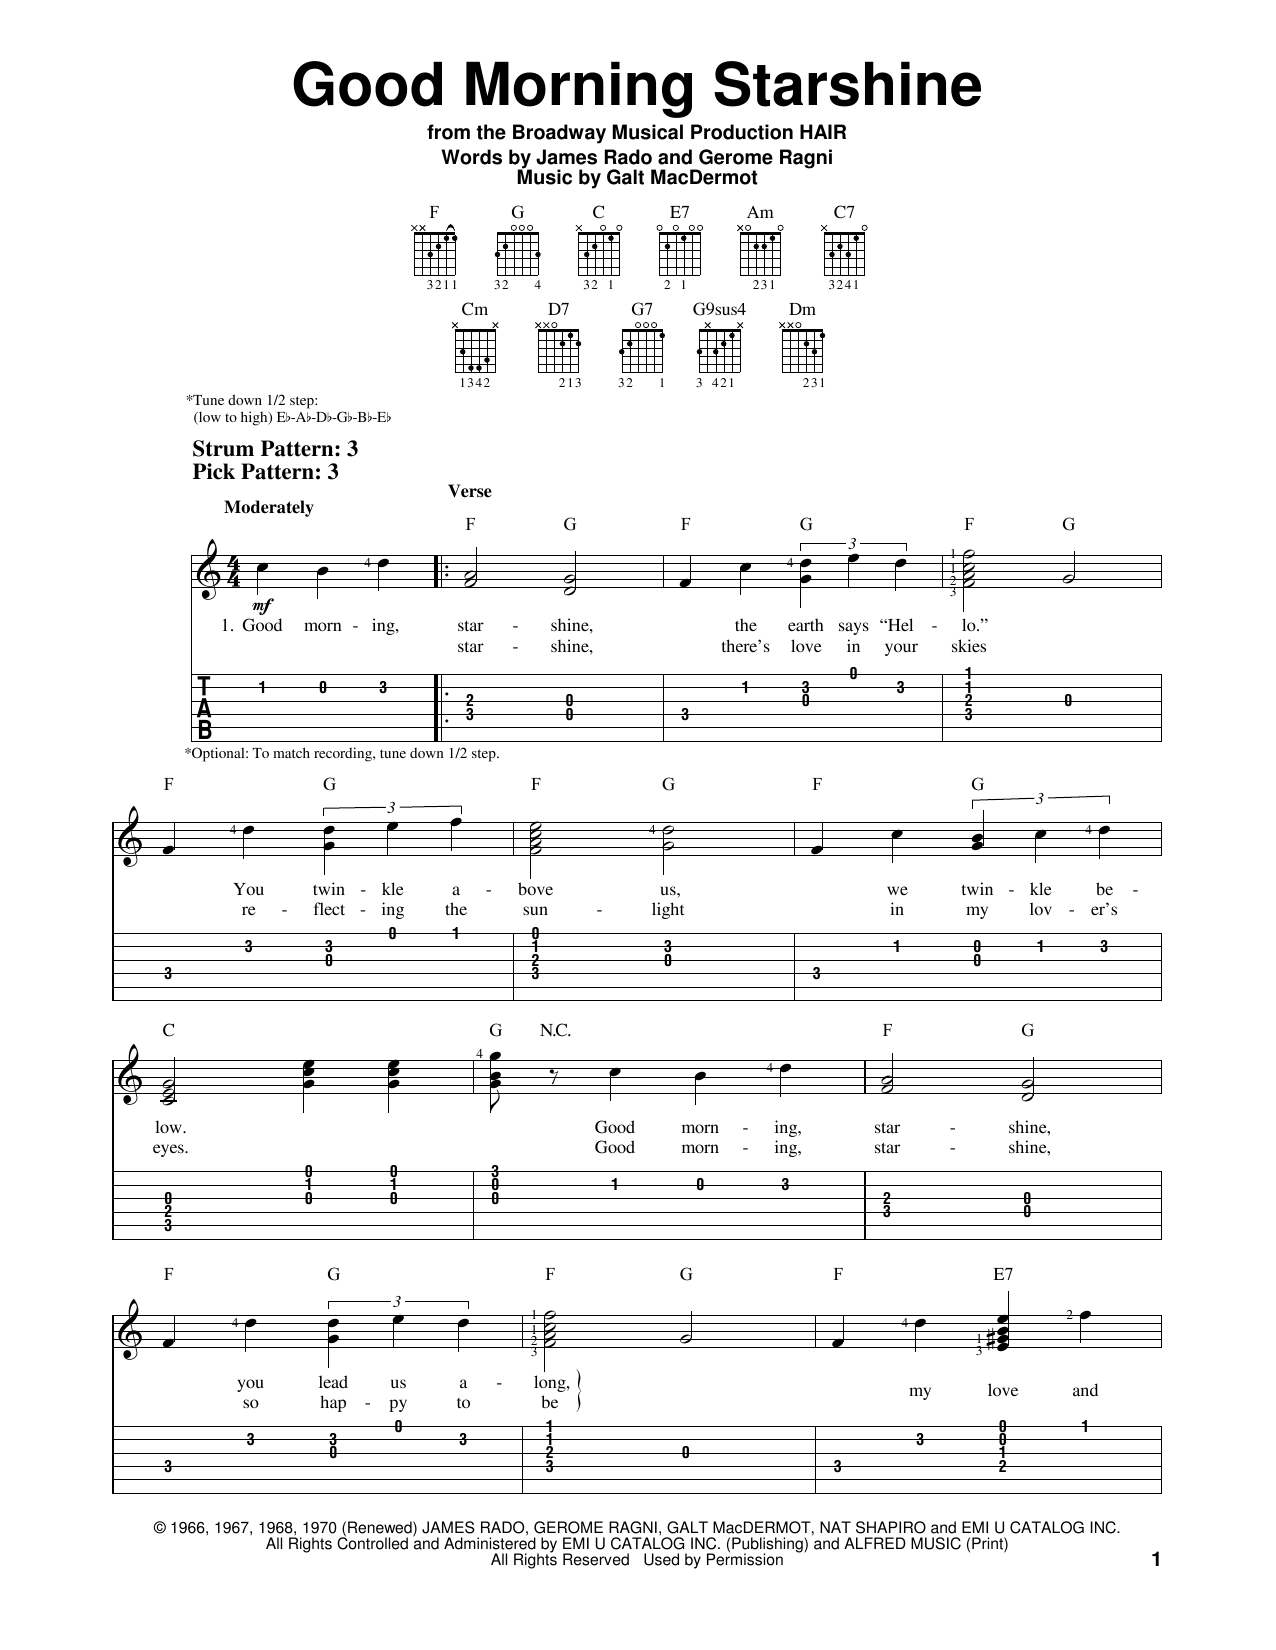 Galt MacDermot Good Morning Starshine Sheet Music Notes & Chords for Melody Line, Lyrics & Chords - Download or Print PDF